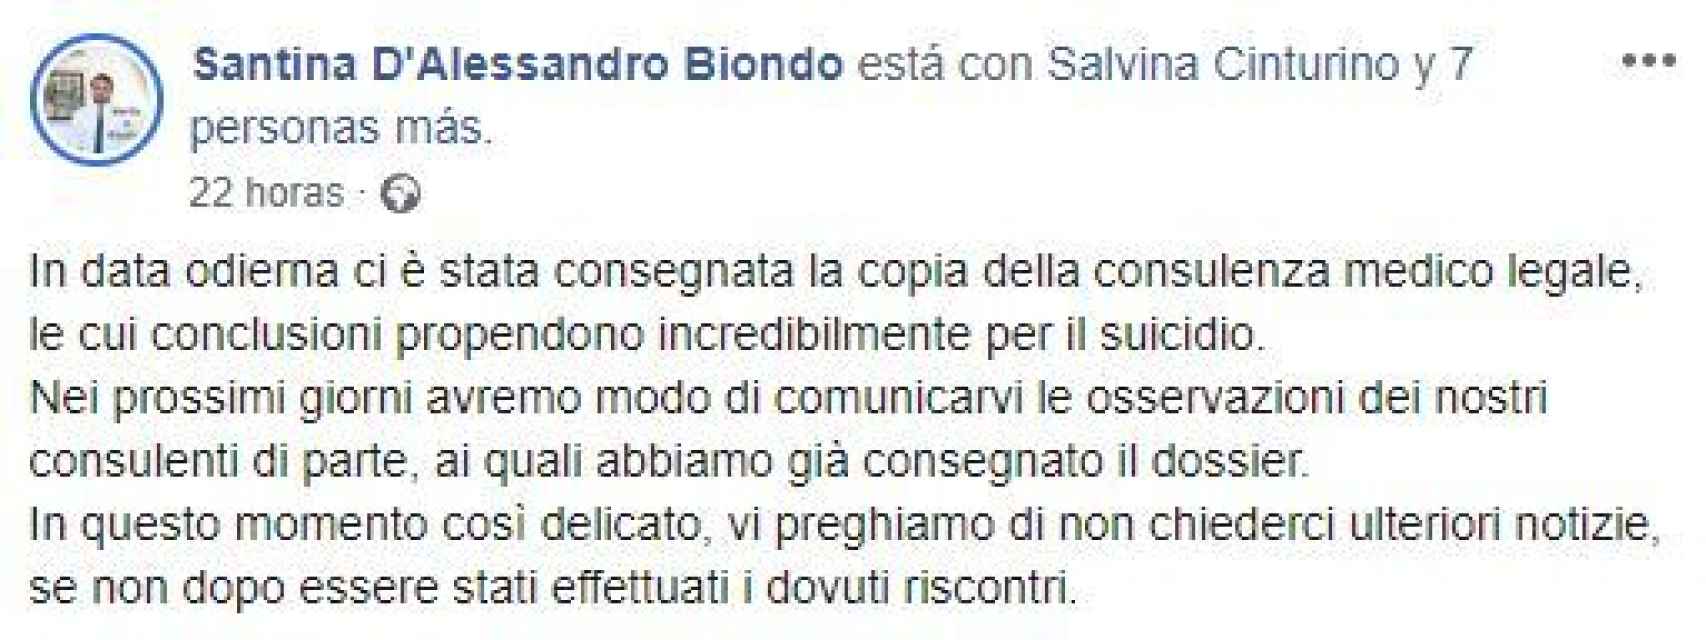 Post de Santina D'Alessandro en Facebook.